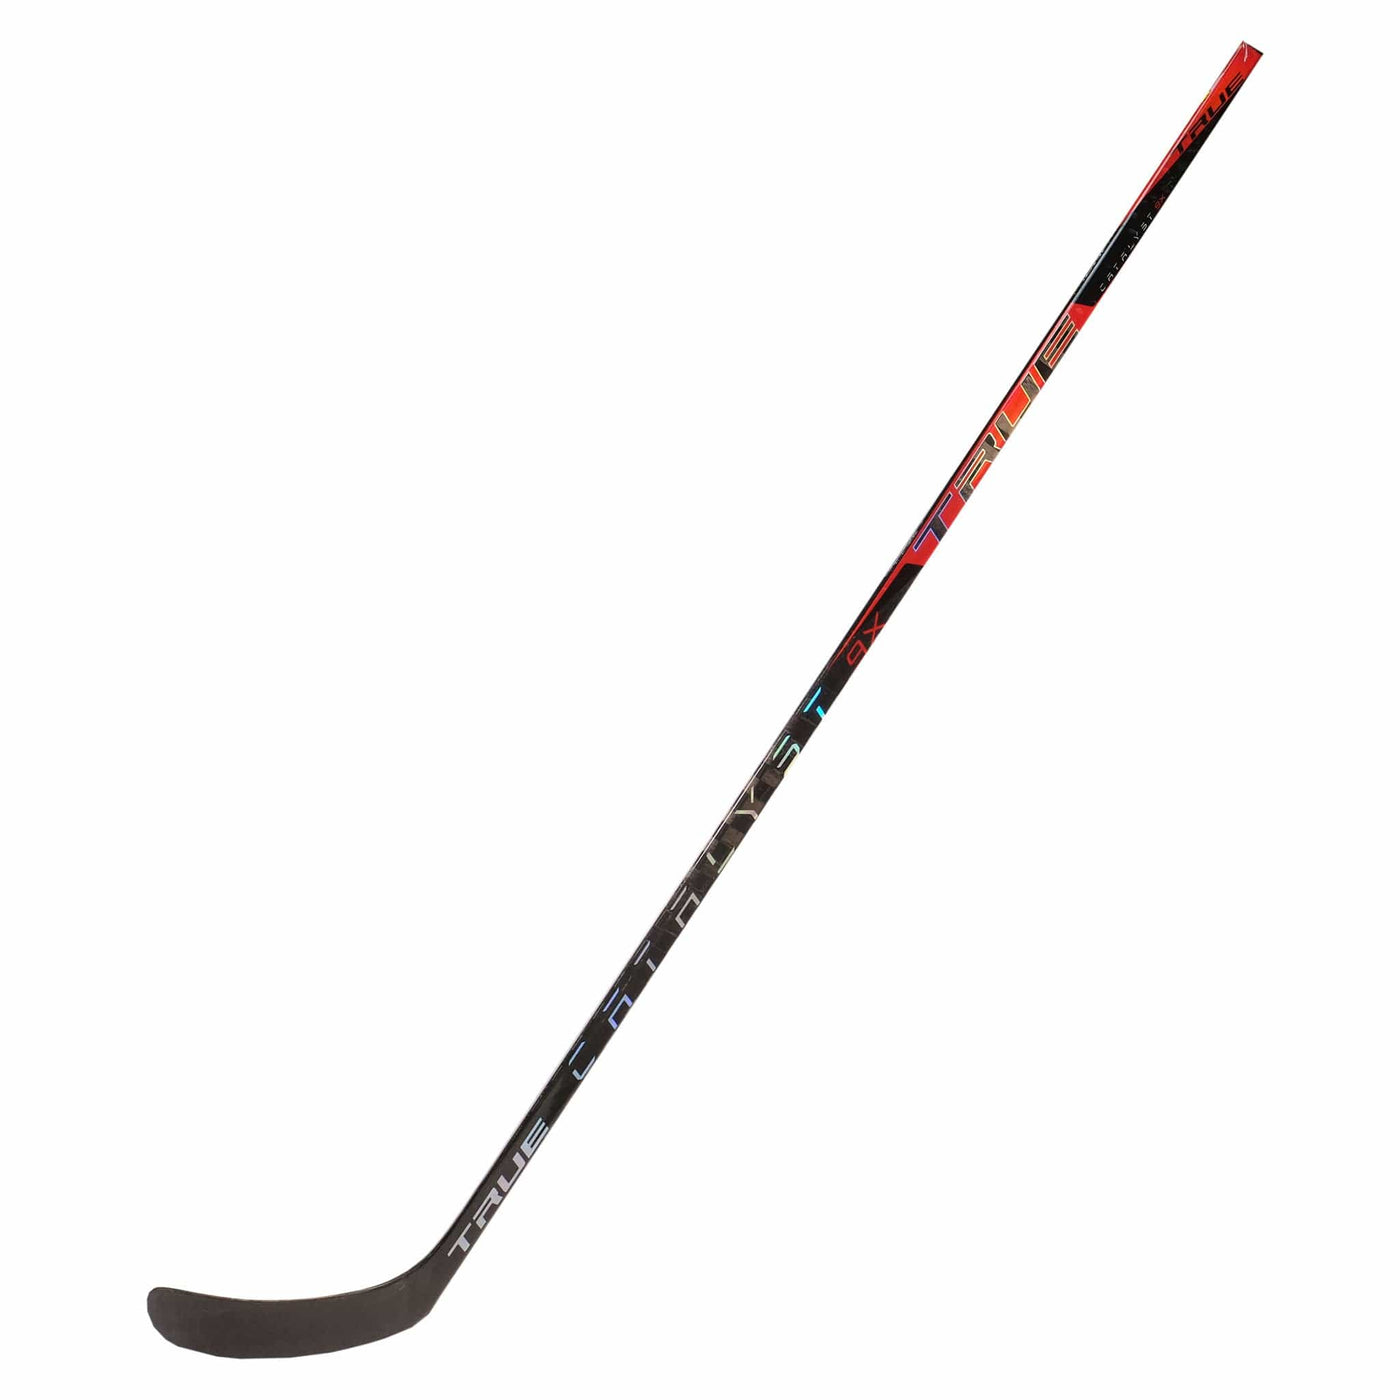 TRUE Catalyst 9X Pro Stock Senior Hockey Stick - Dillon Dube - TC2 - L-80 - The Hockey Shop Source For Sports